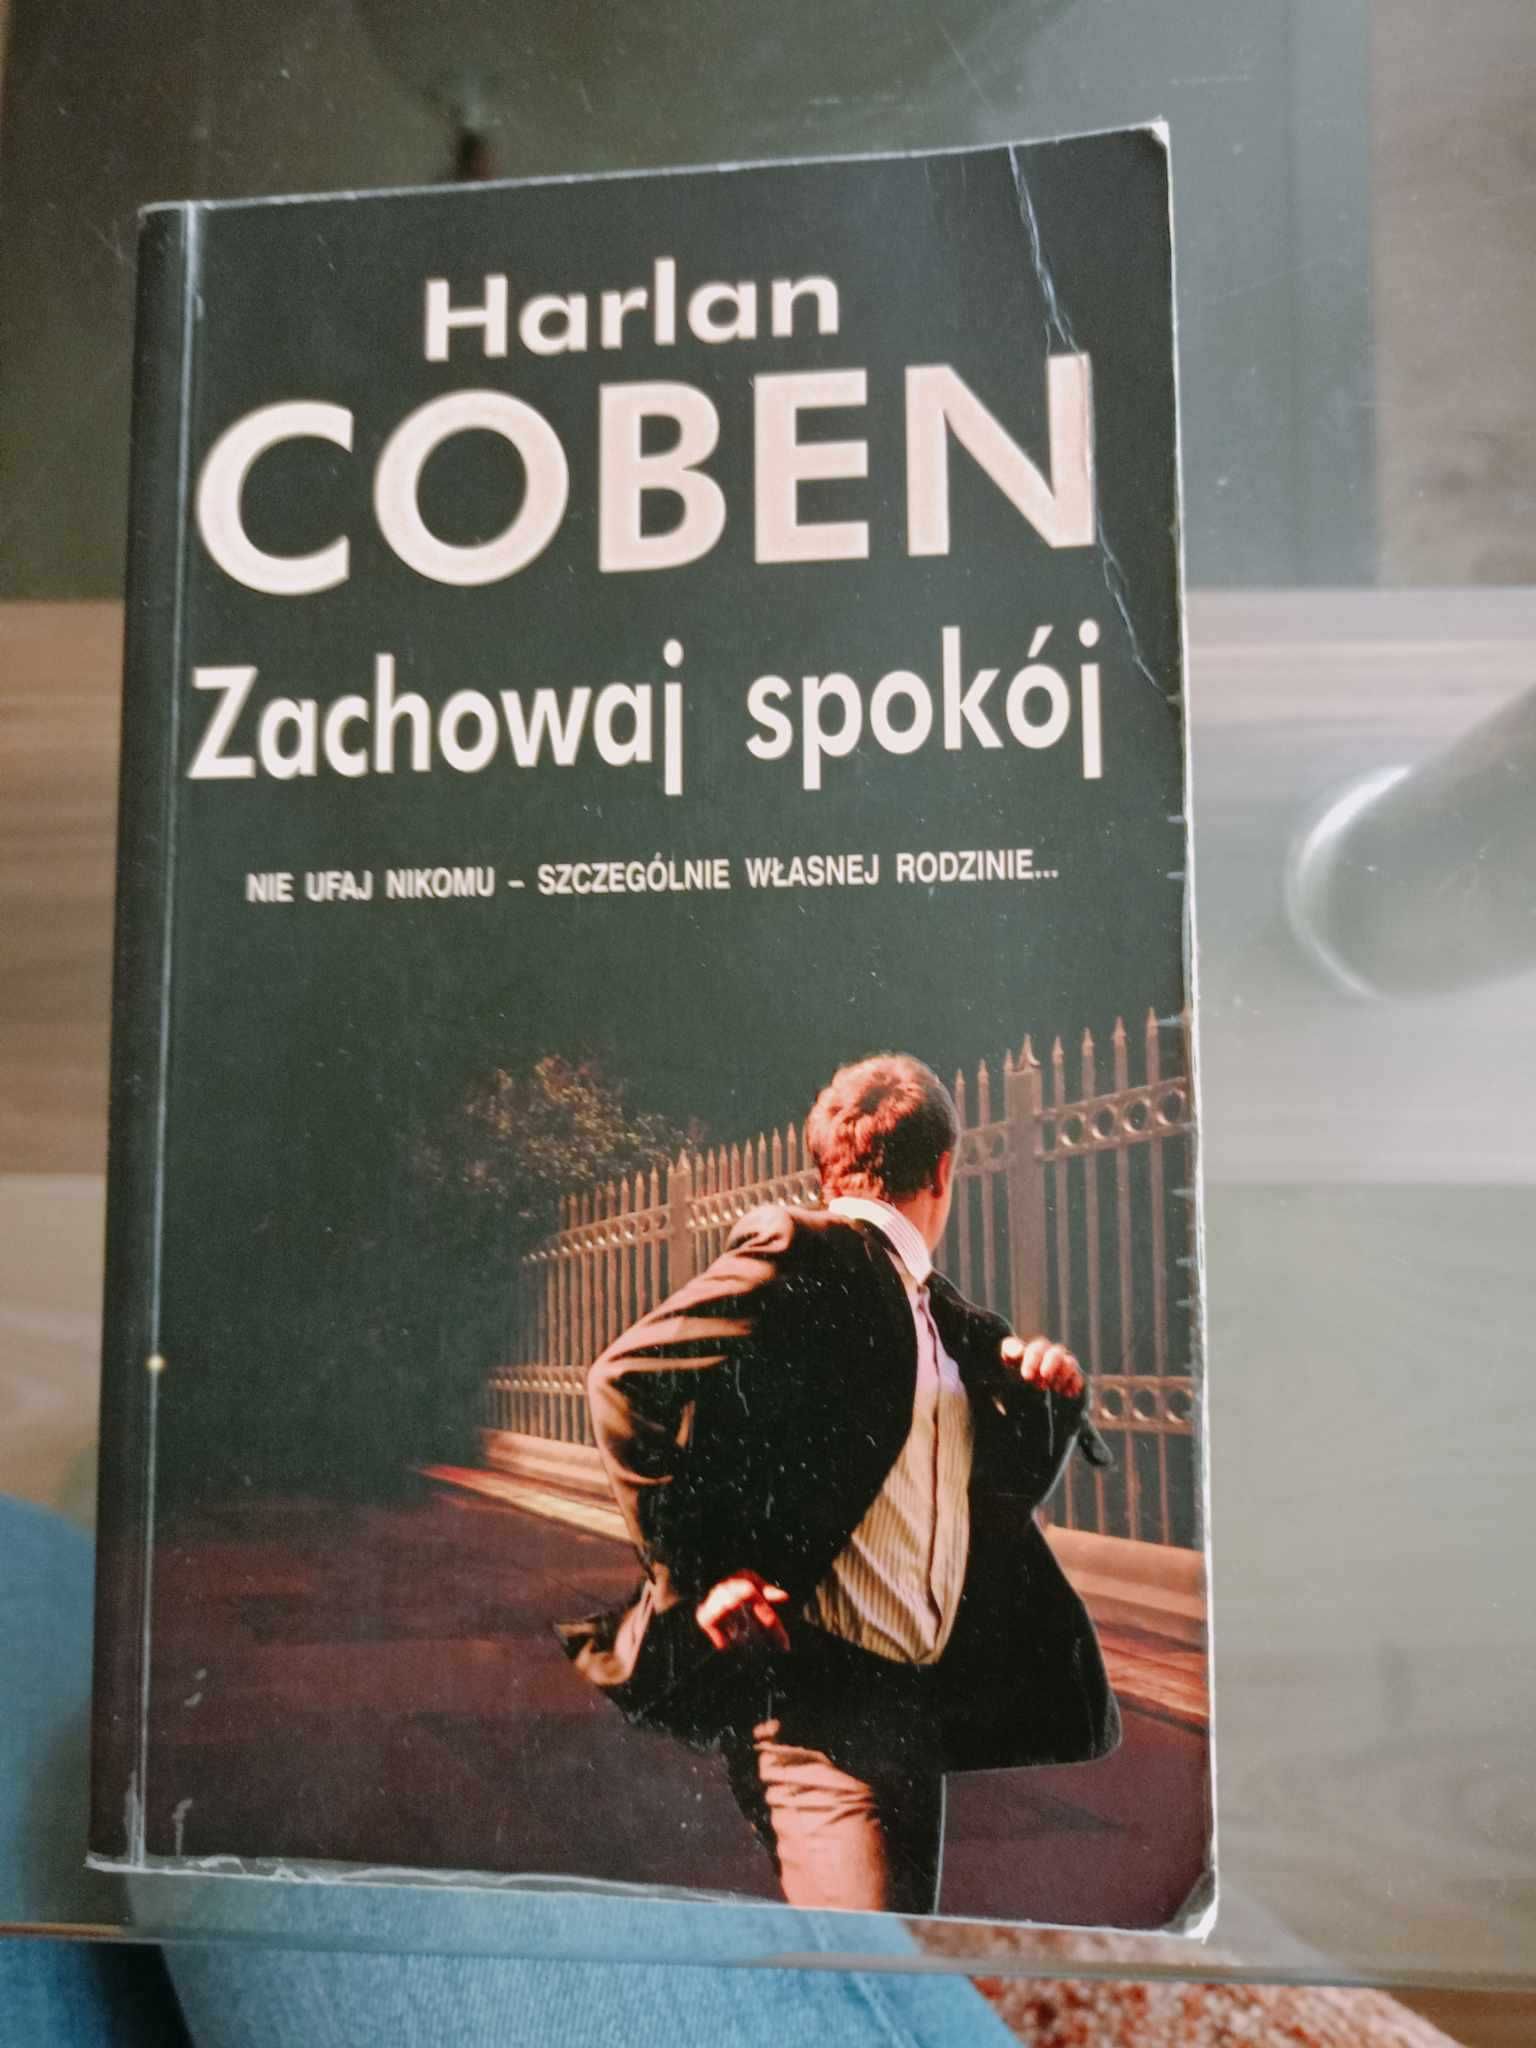 Harlan Coben "Zachowaj spokój" thriller kryminał